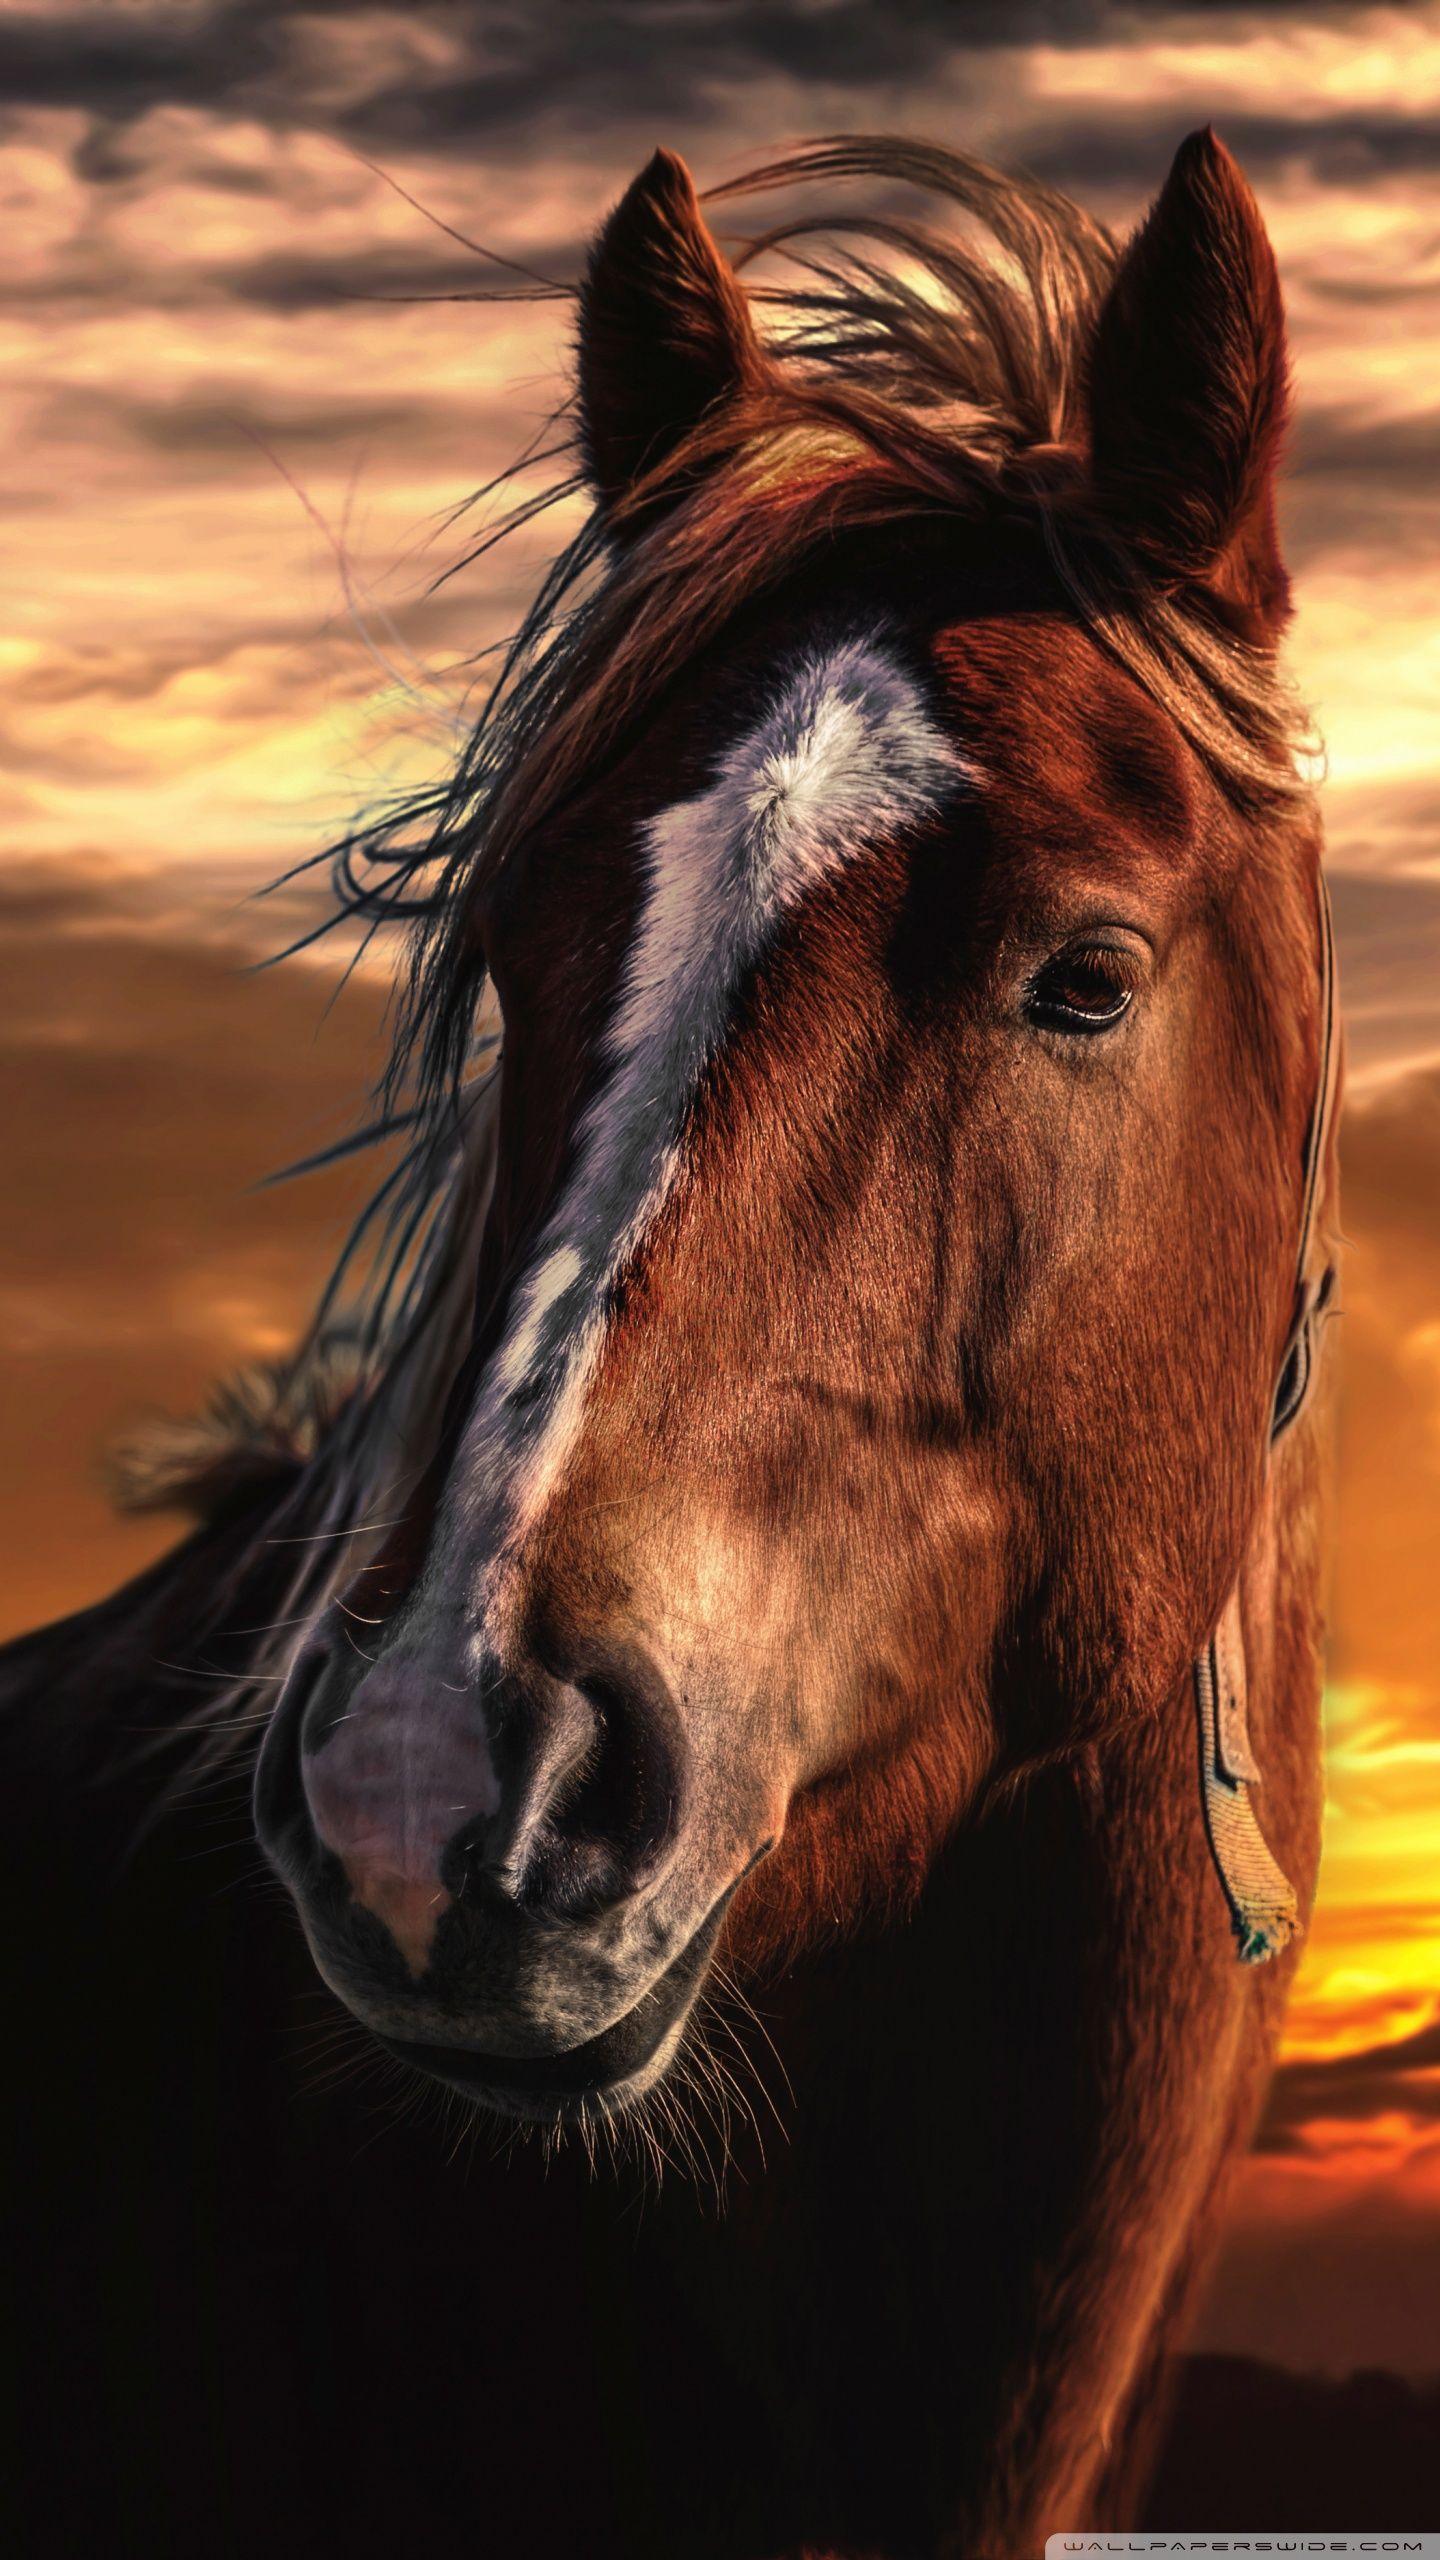 Brown Horse with White Stripe on Face ❤ 4K HD Desktop Wallpaper